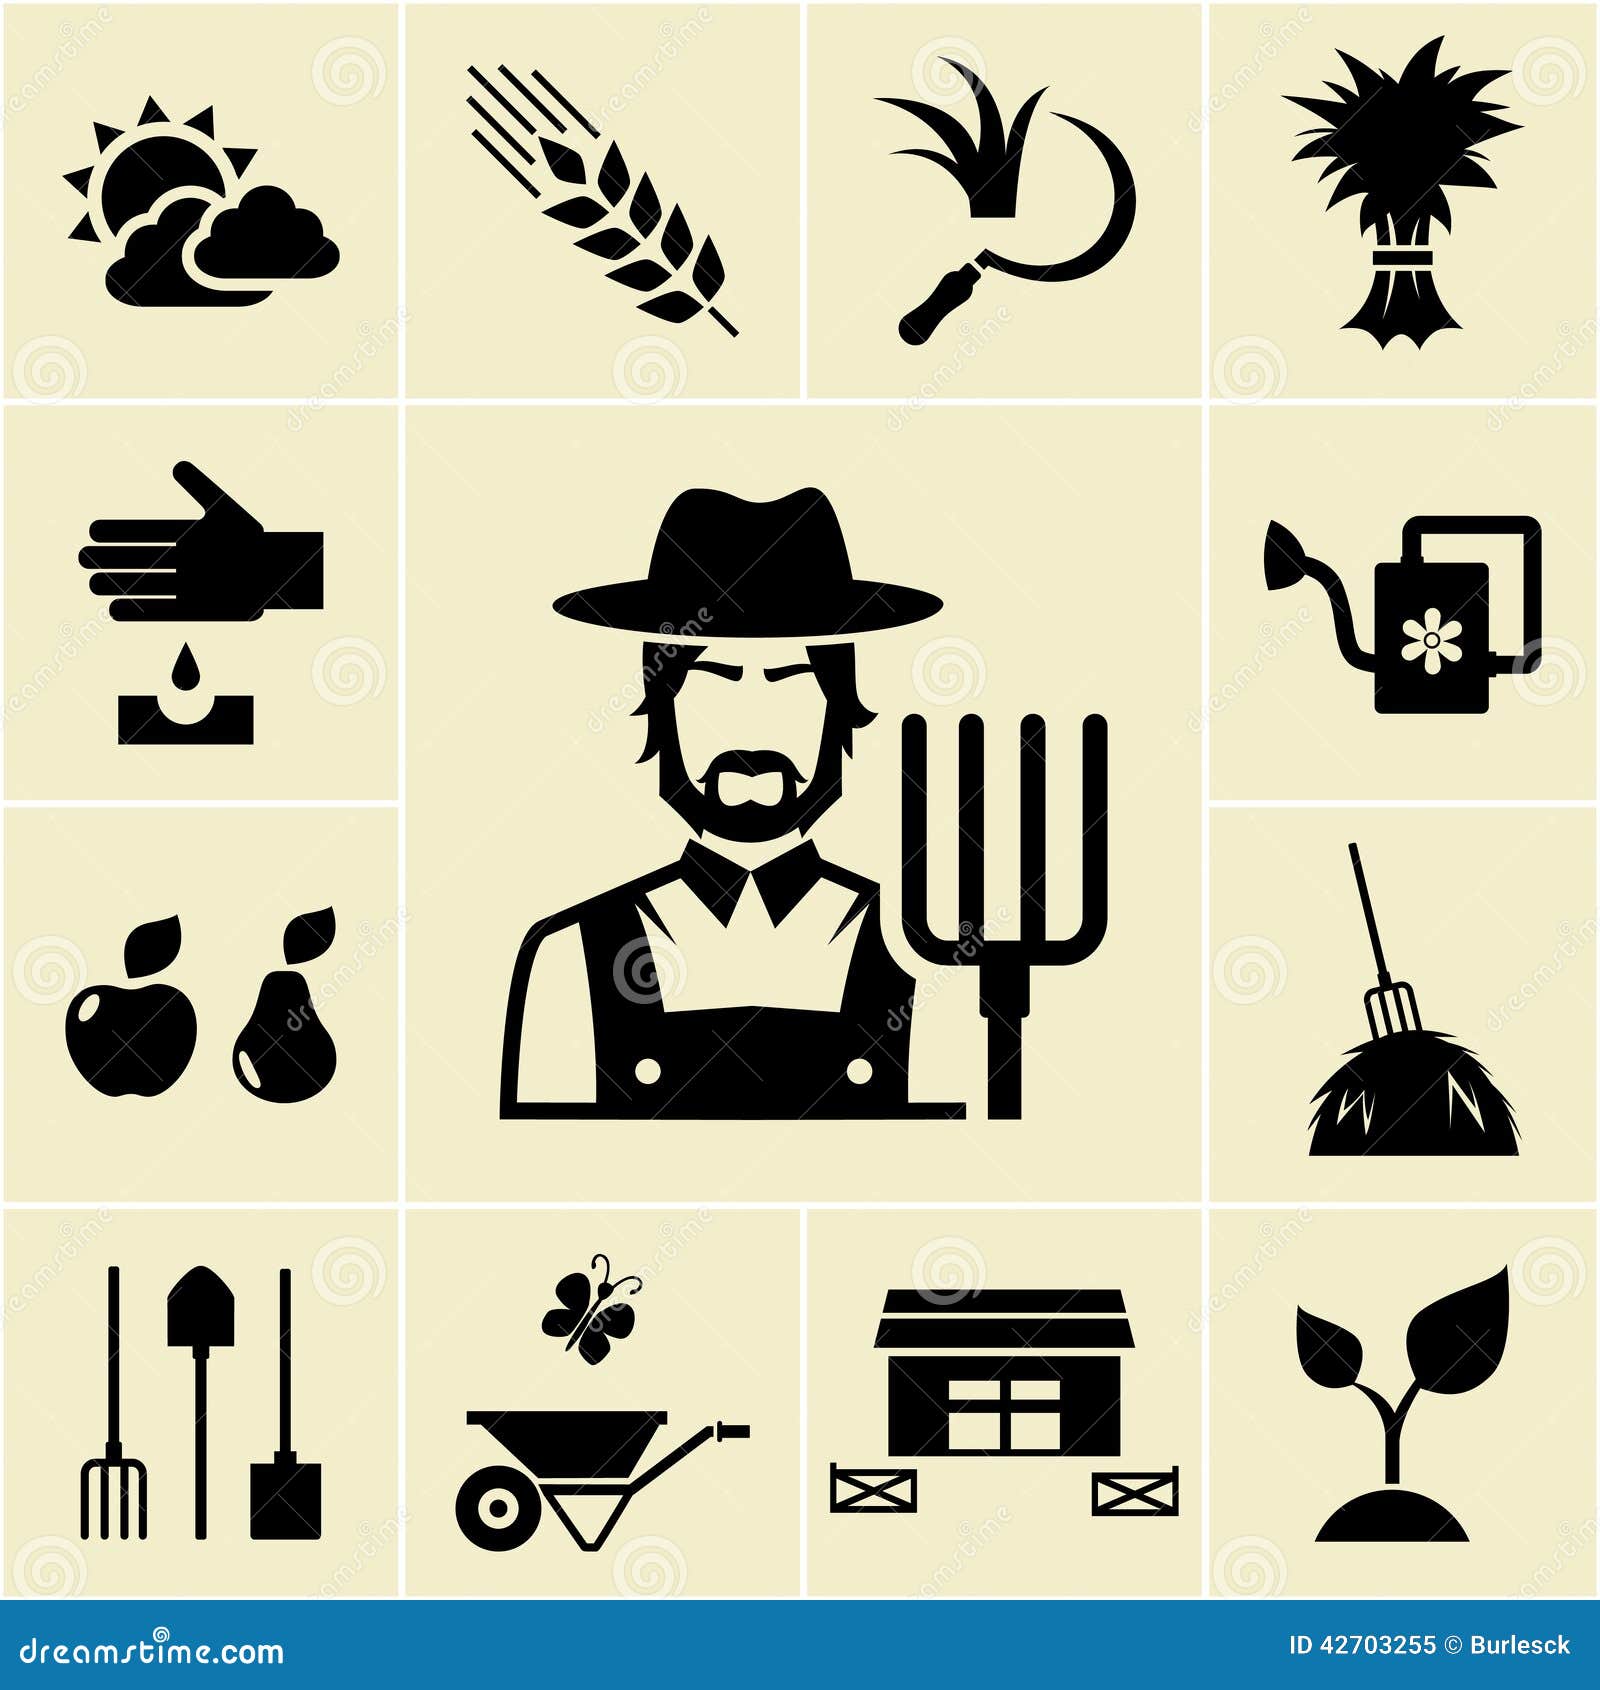 Farmer Stock Illustrations – 817 Farmer Weather Stock Illustrations, Vectors & Clipart - Dreamstime